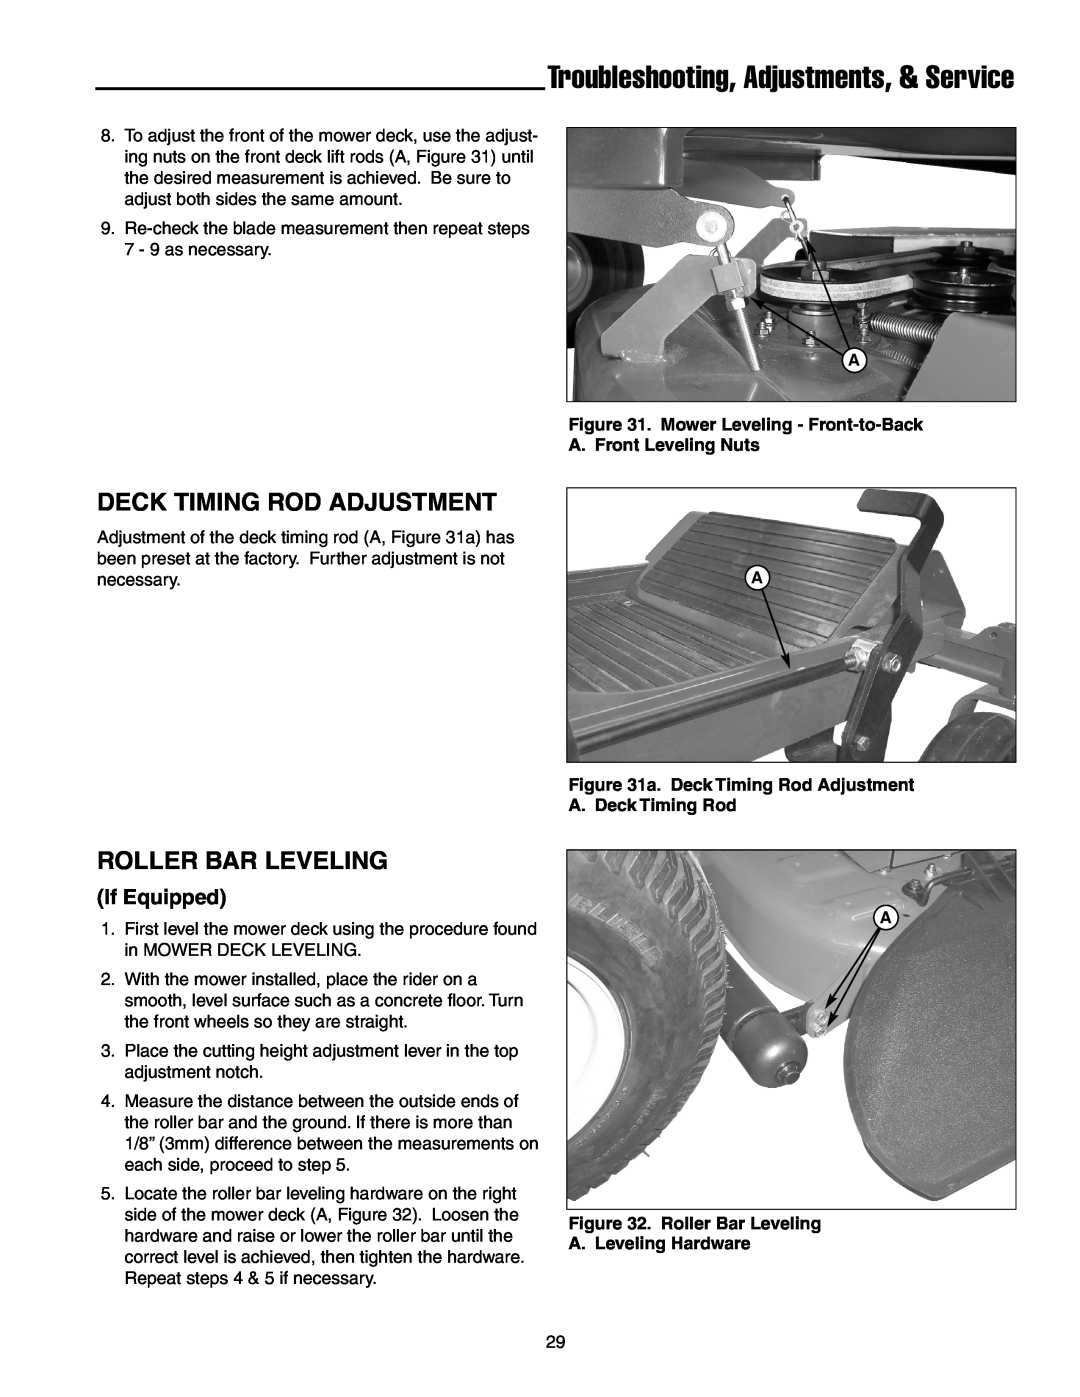 Simplicity 250 Z manual Deck Timing Rod Adjustment, Roller Bar Leveling, Troubleshooting, Adjustments, & Service 